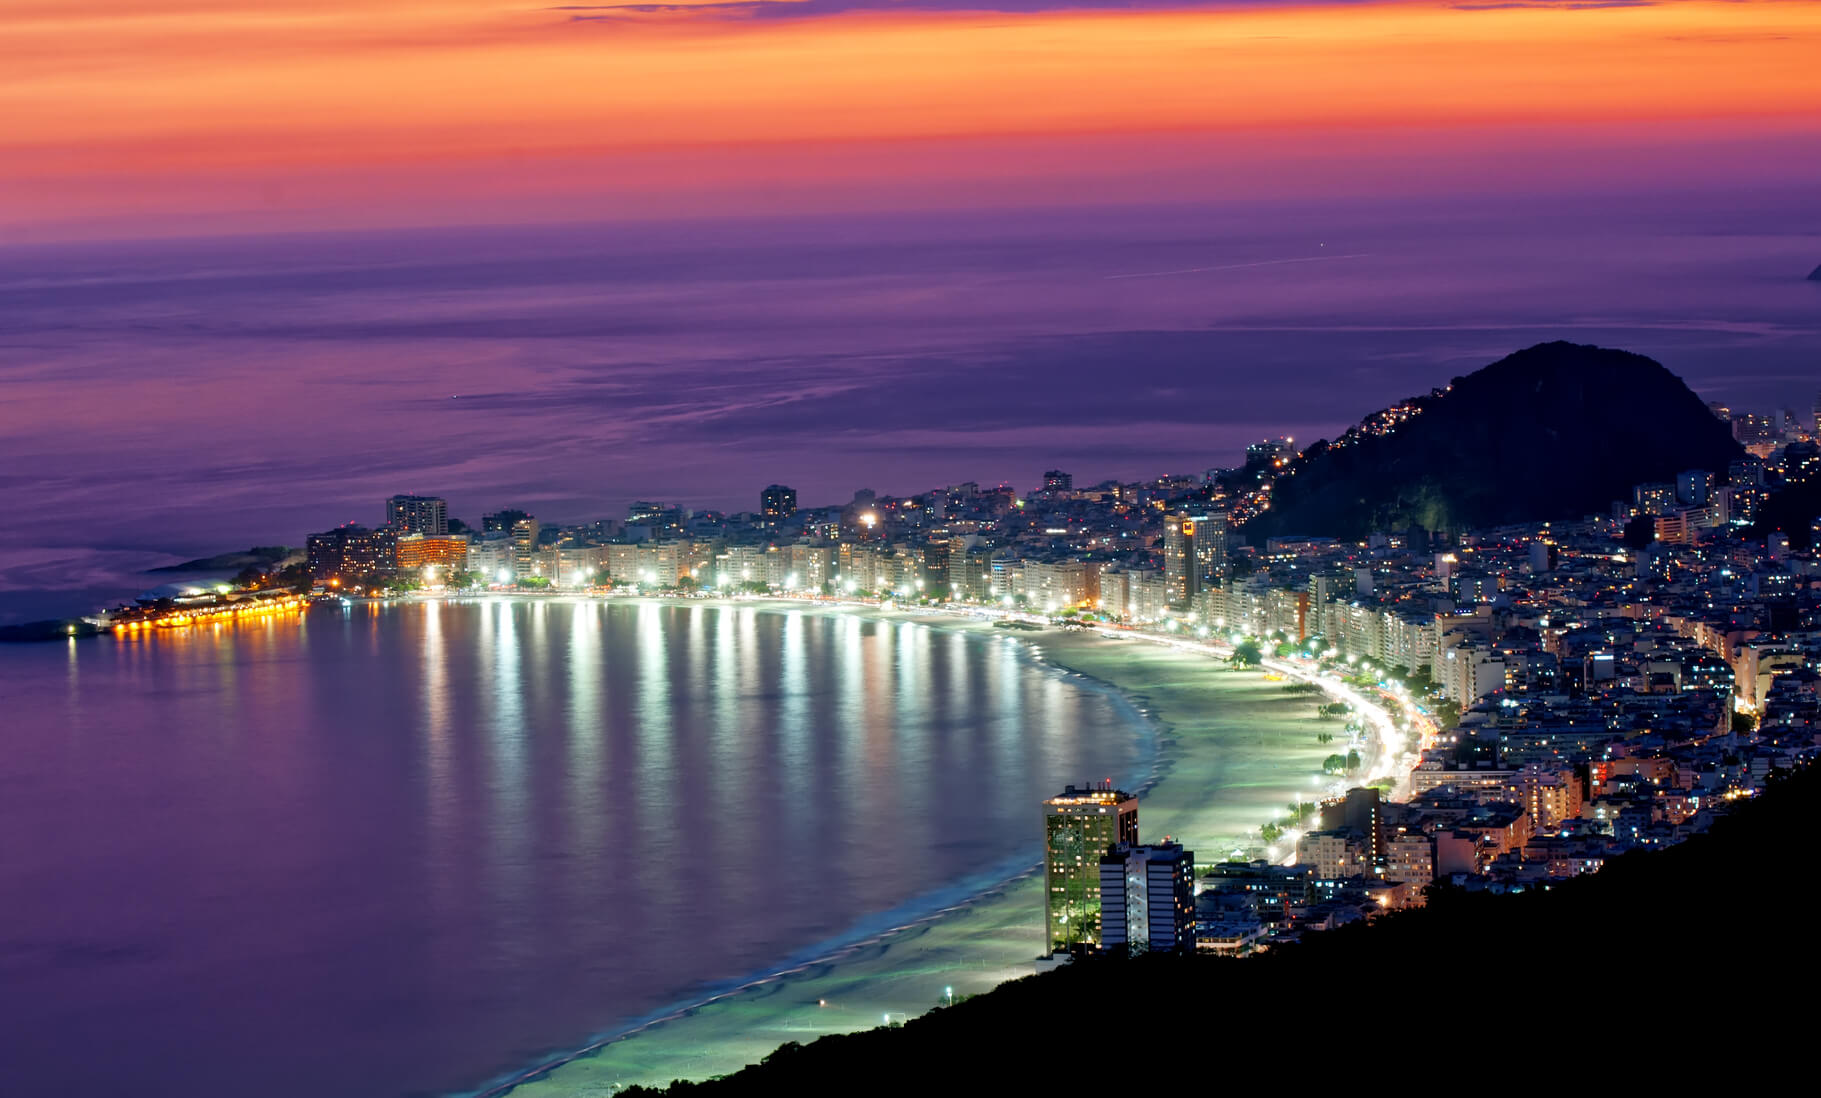 Flight deals from Johannesburg, South Africa to Rio De Janeiro, Brazil | Secret Flying